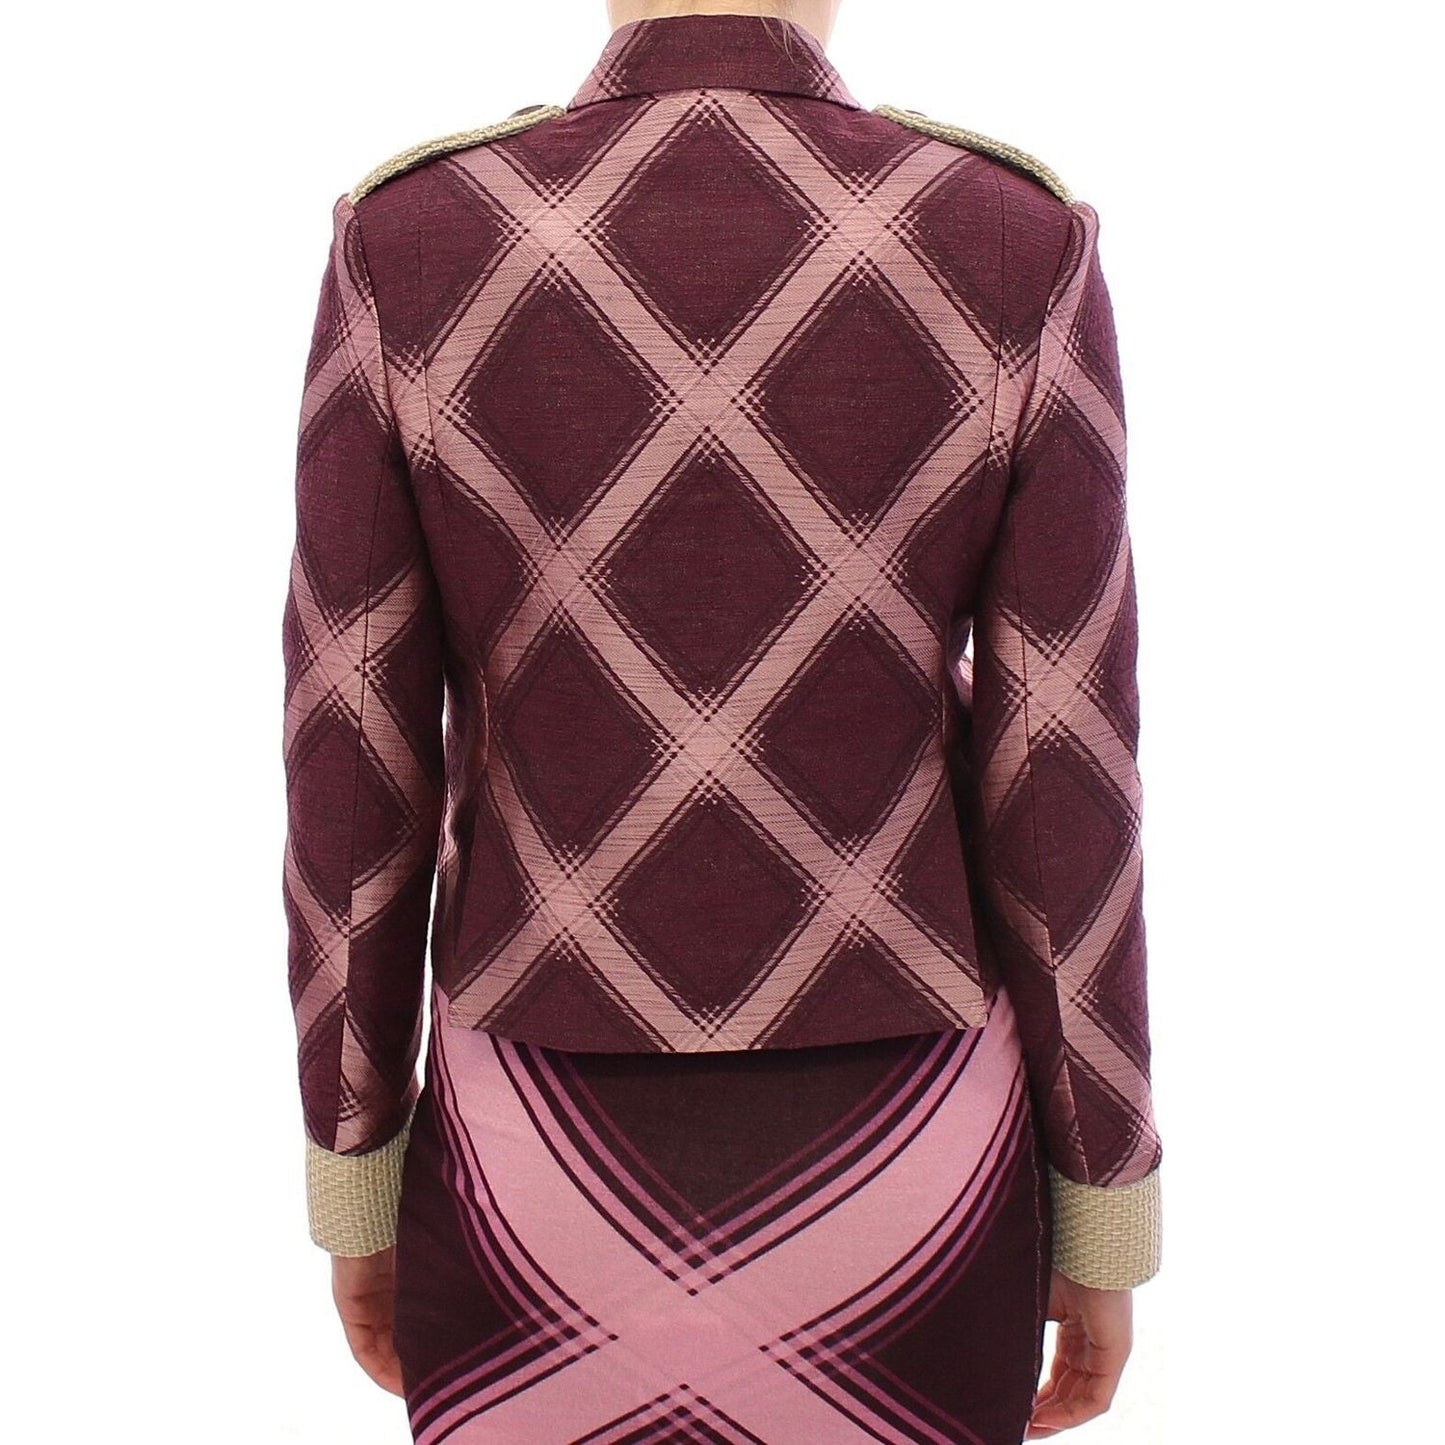 House of Holland Elegant Multicolor Check Print Jacket WOMAN COATS & JACKETS check-trench-coat-blazer-purple-jacket